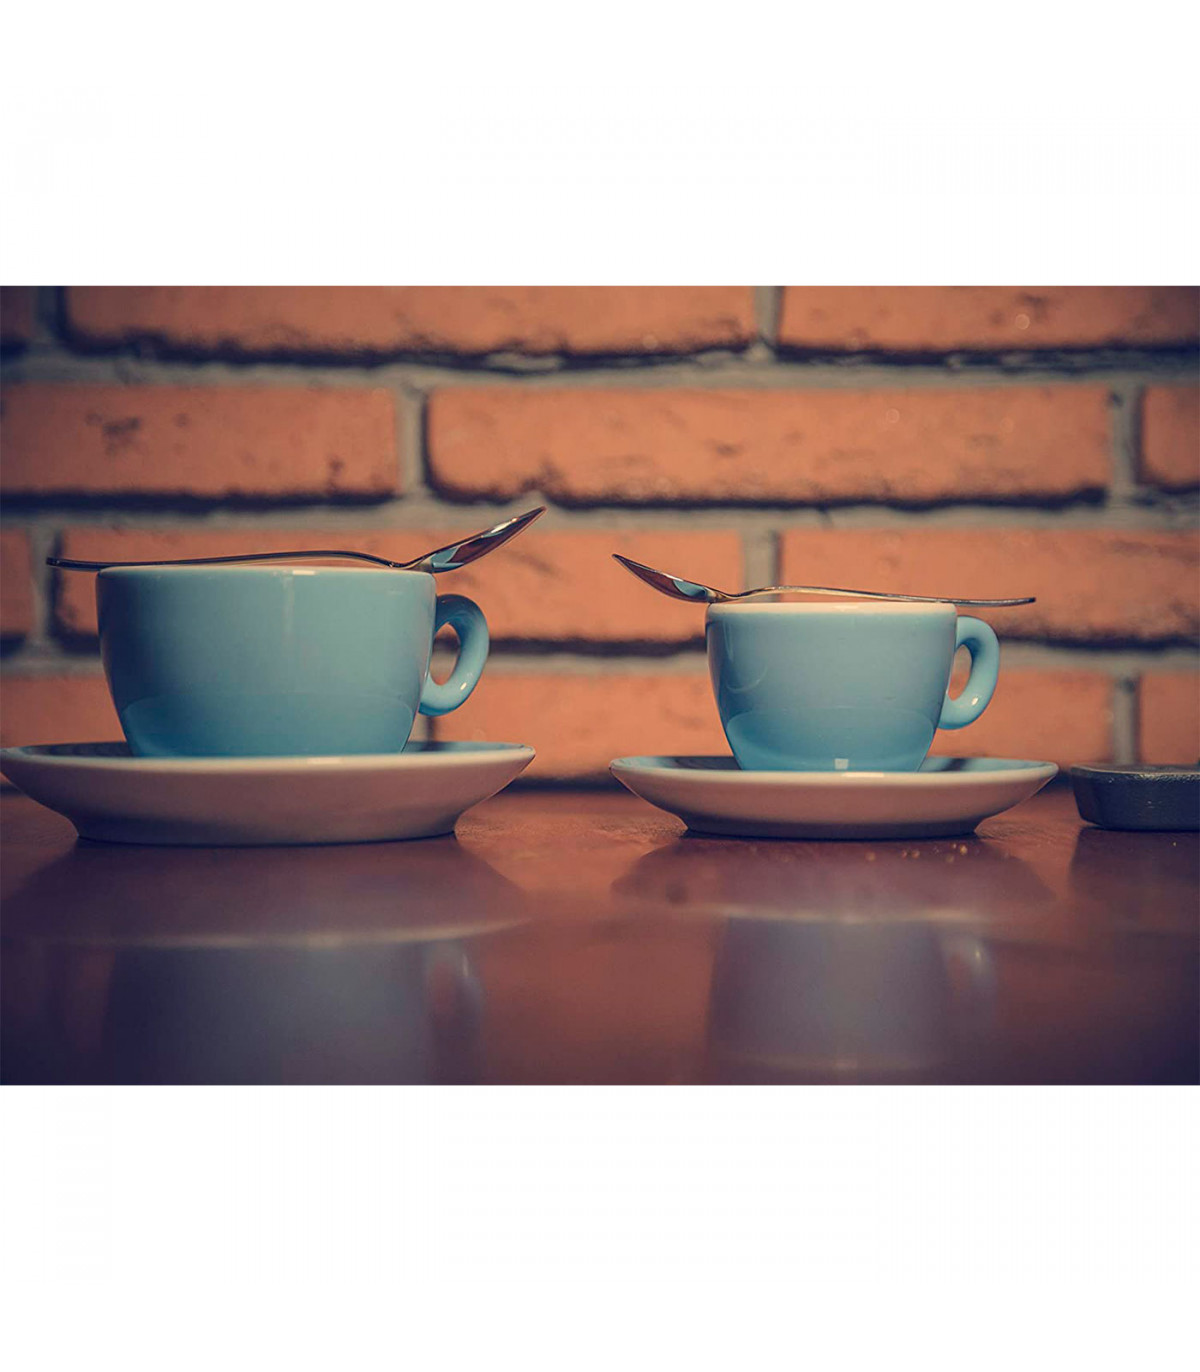 helado Cucharillas de café cucharas de té de porcelana porlien 15 cm-Set de 6-for café bien de tazas de café y tazas de té yogur aperitivos y postres té 